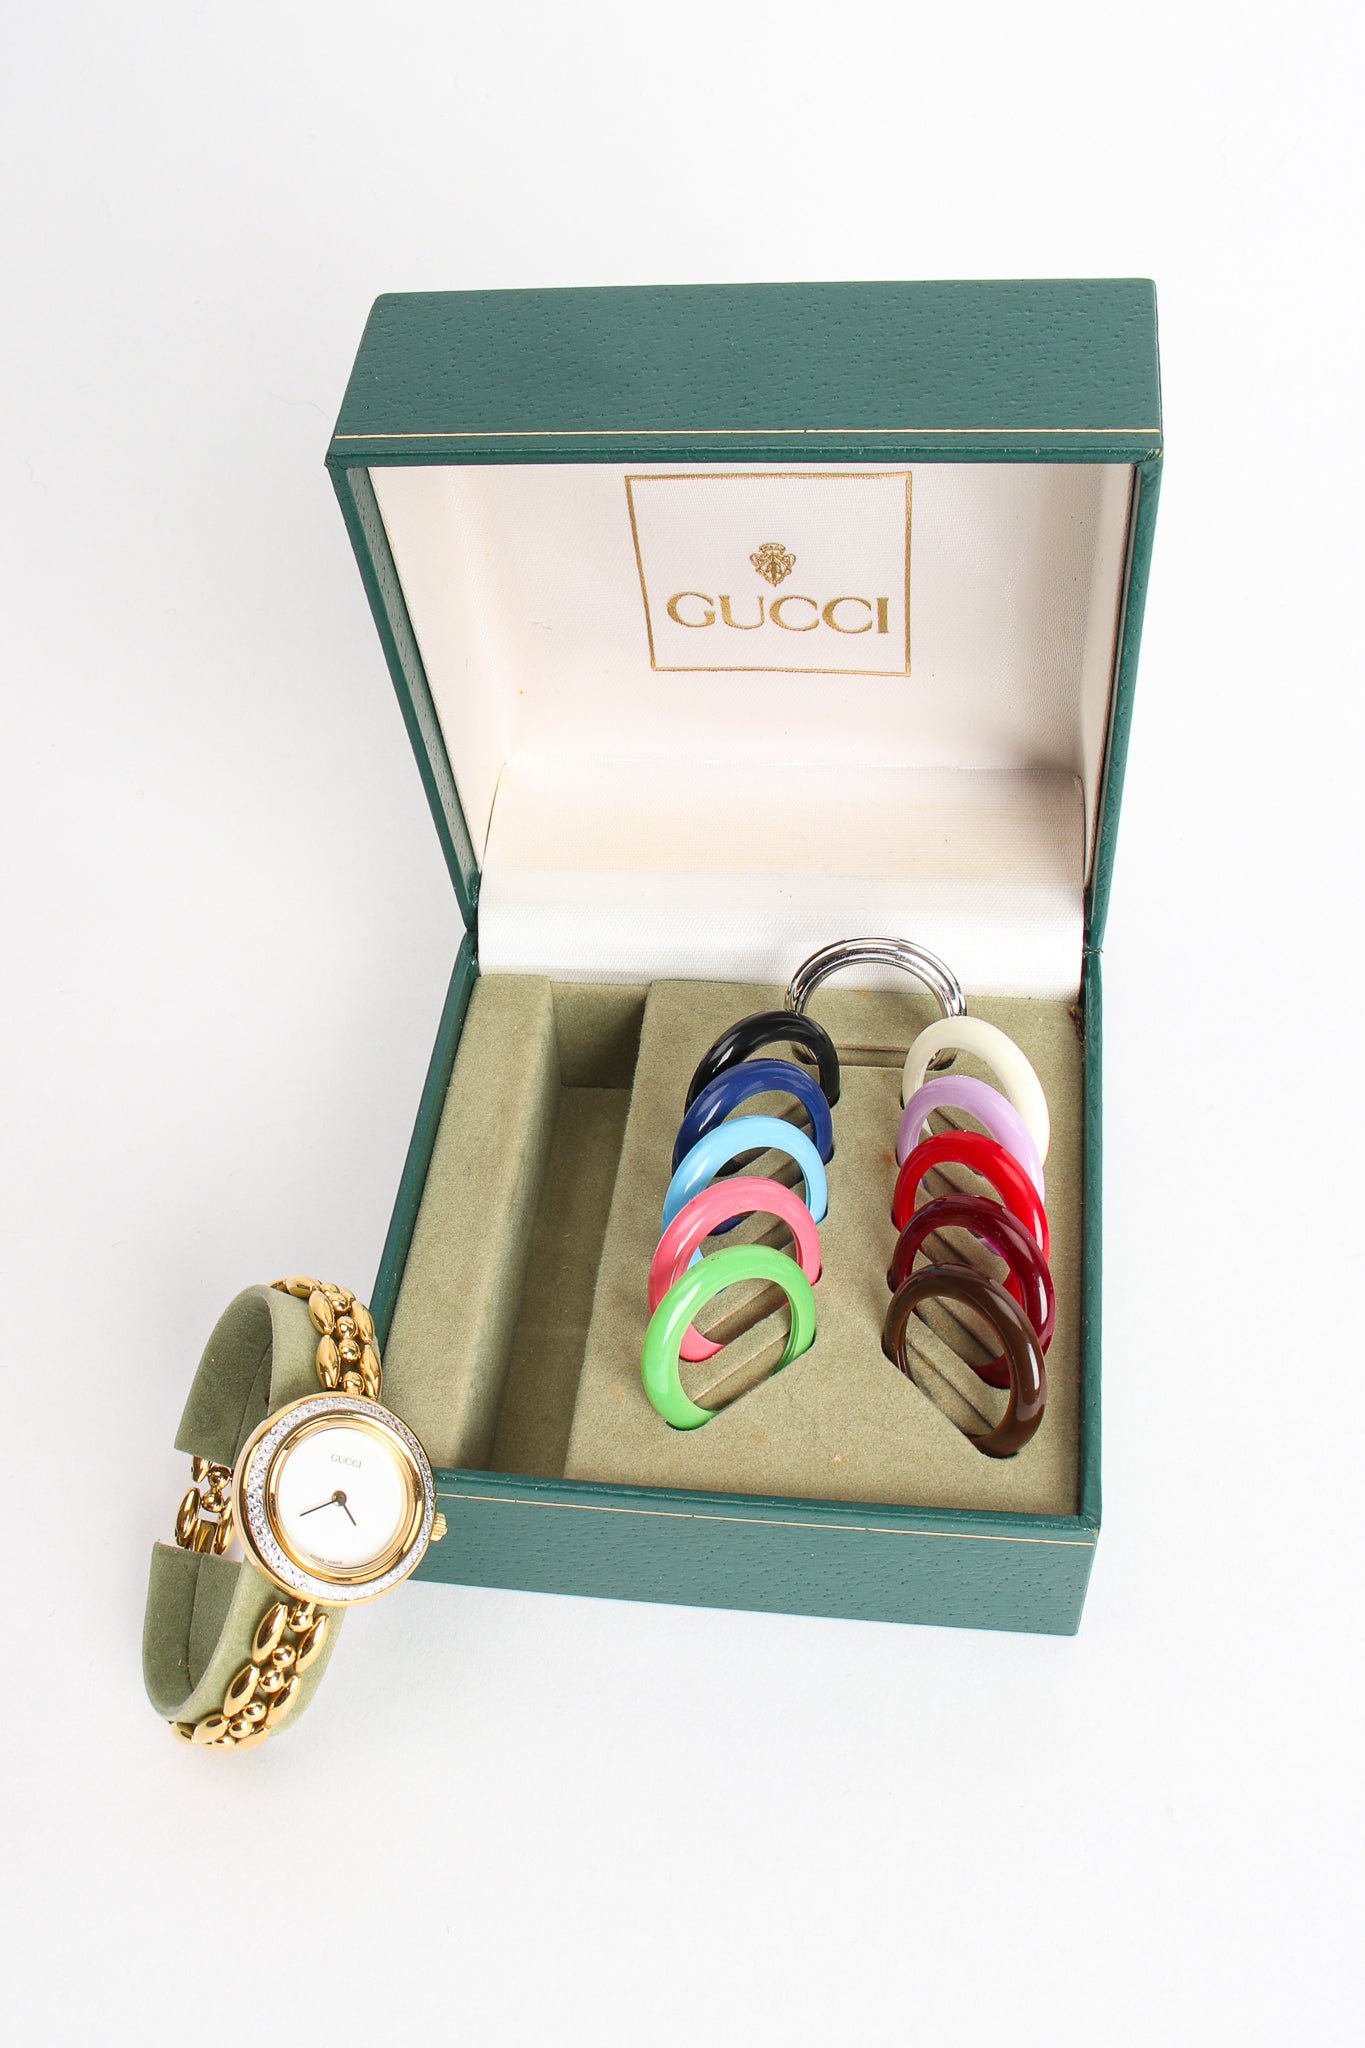 Vintage Gucci 12 Bezel Bracelet Watch Boxed Set at Recess Los Angeles